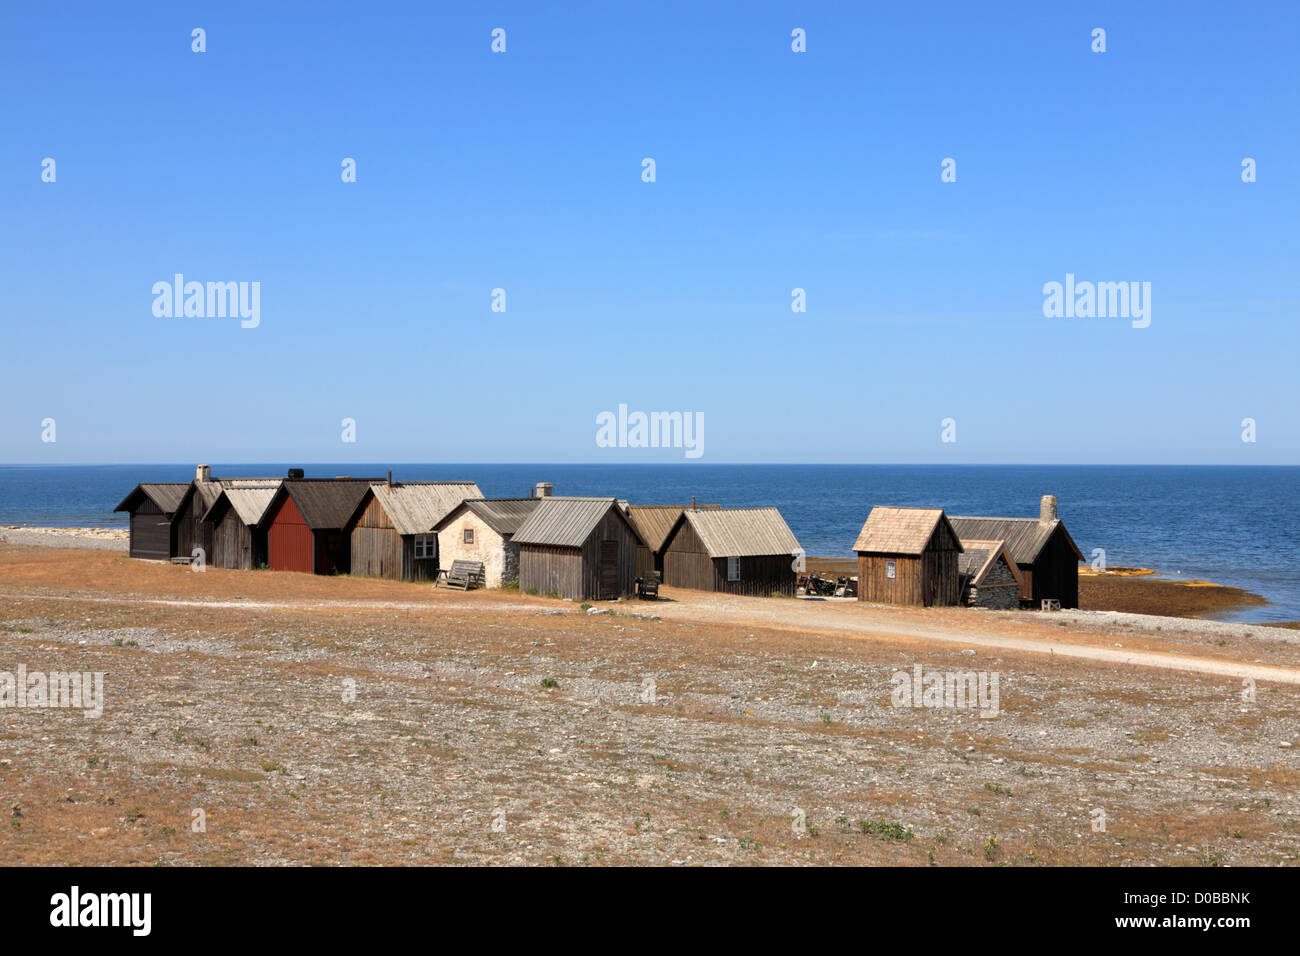 Fishermen's cabins on the coast of the Swedish island Fårö near Gotland in the Baltic Sea. Stock Photo